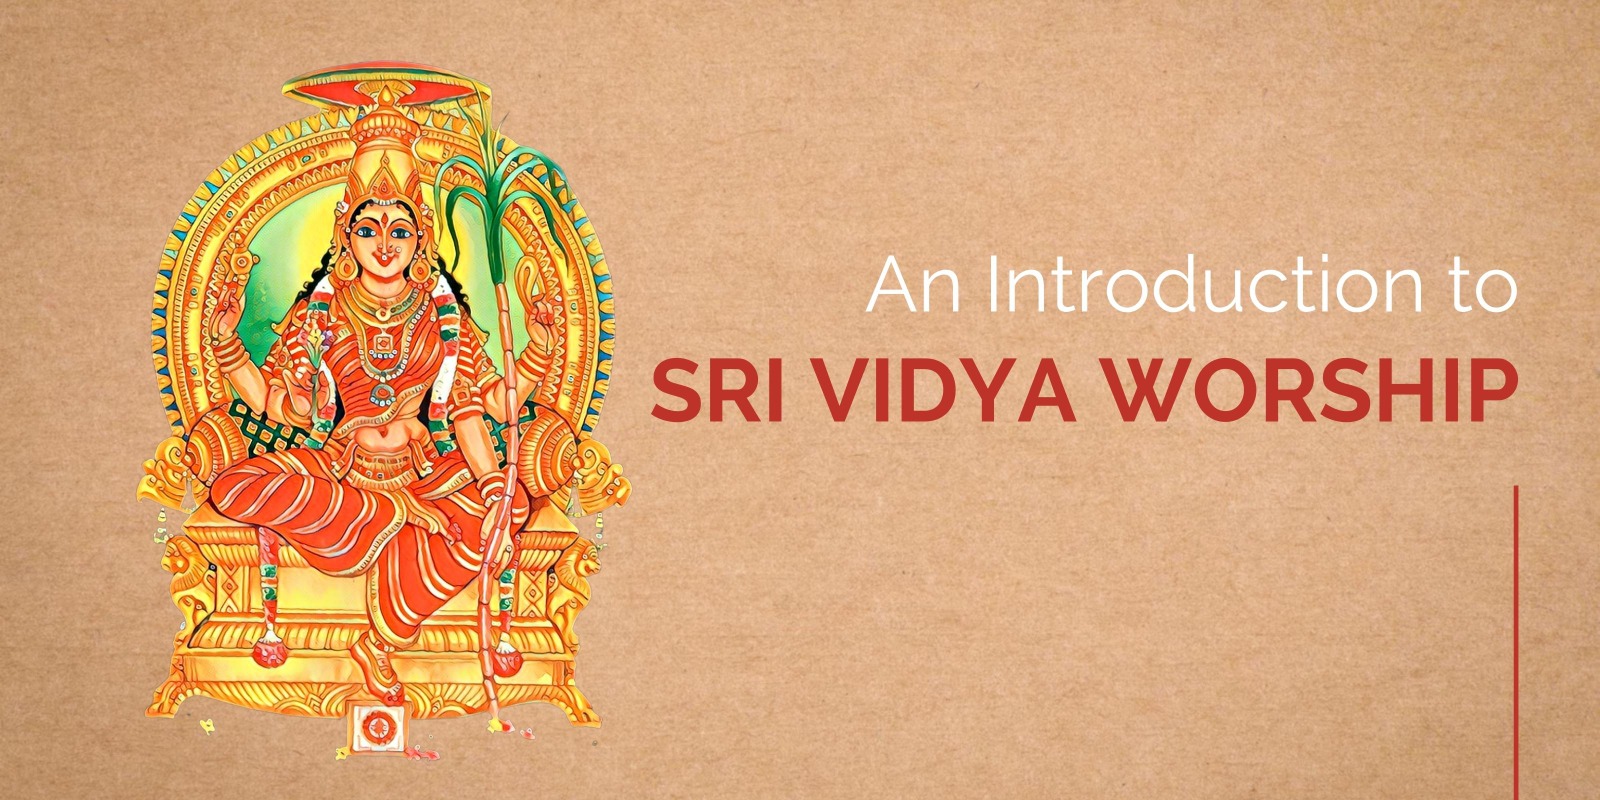 An Introduction to Sri Vidya Worship